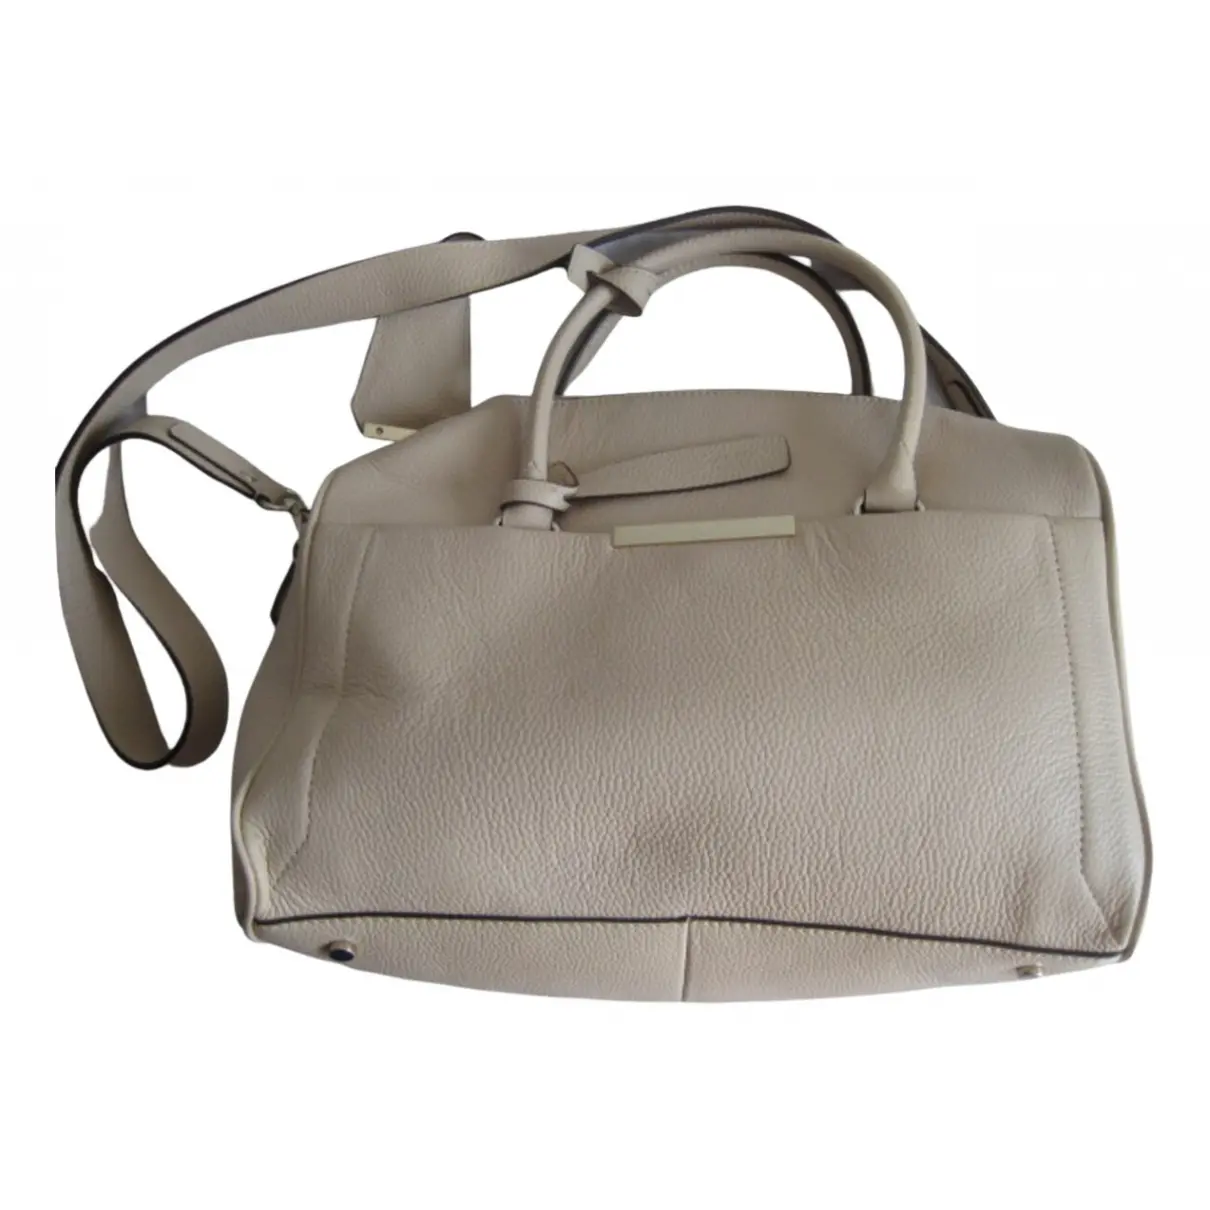 Leather handbag Clarks